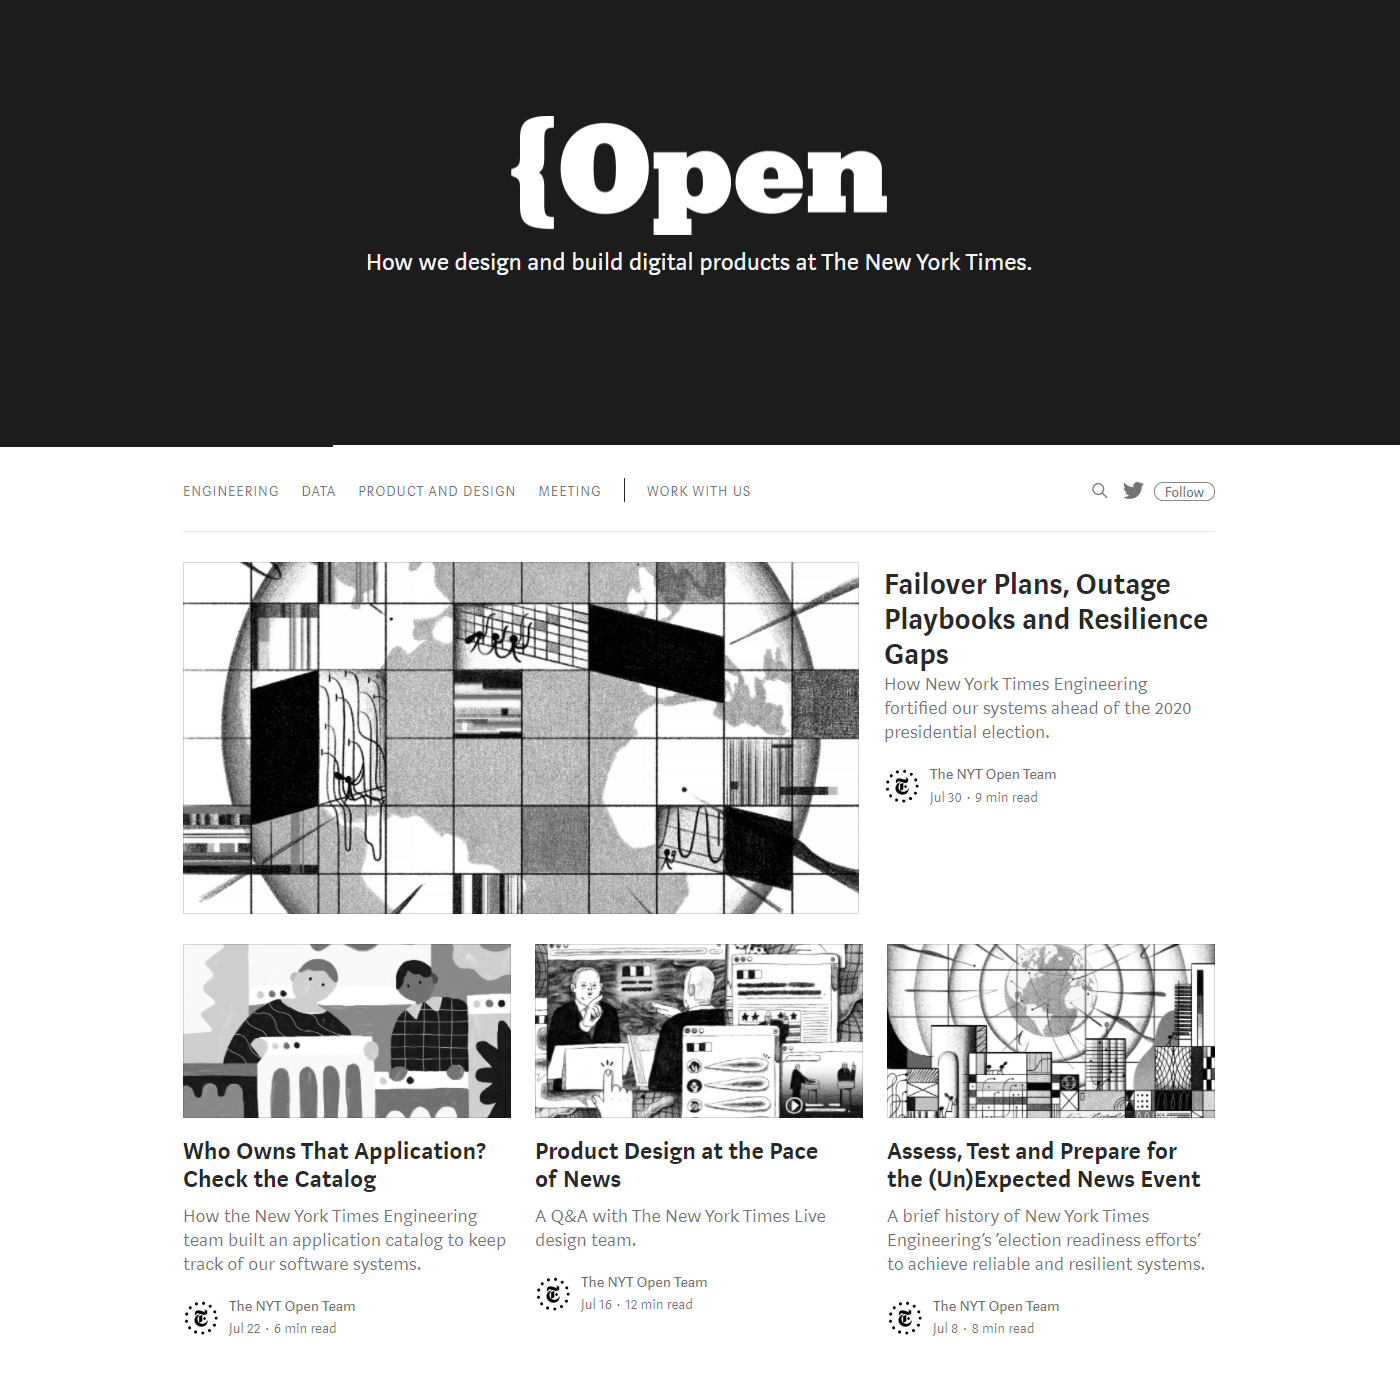 Домашняя страница Open, микросайта New York Times.